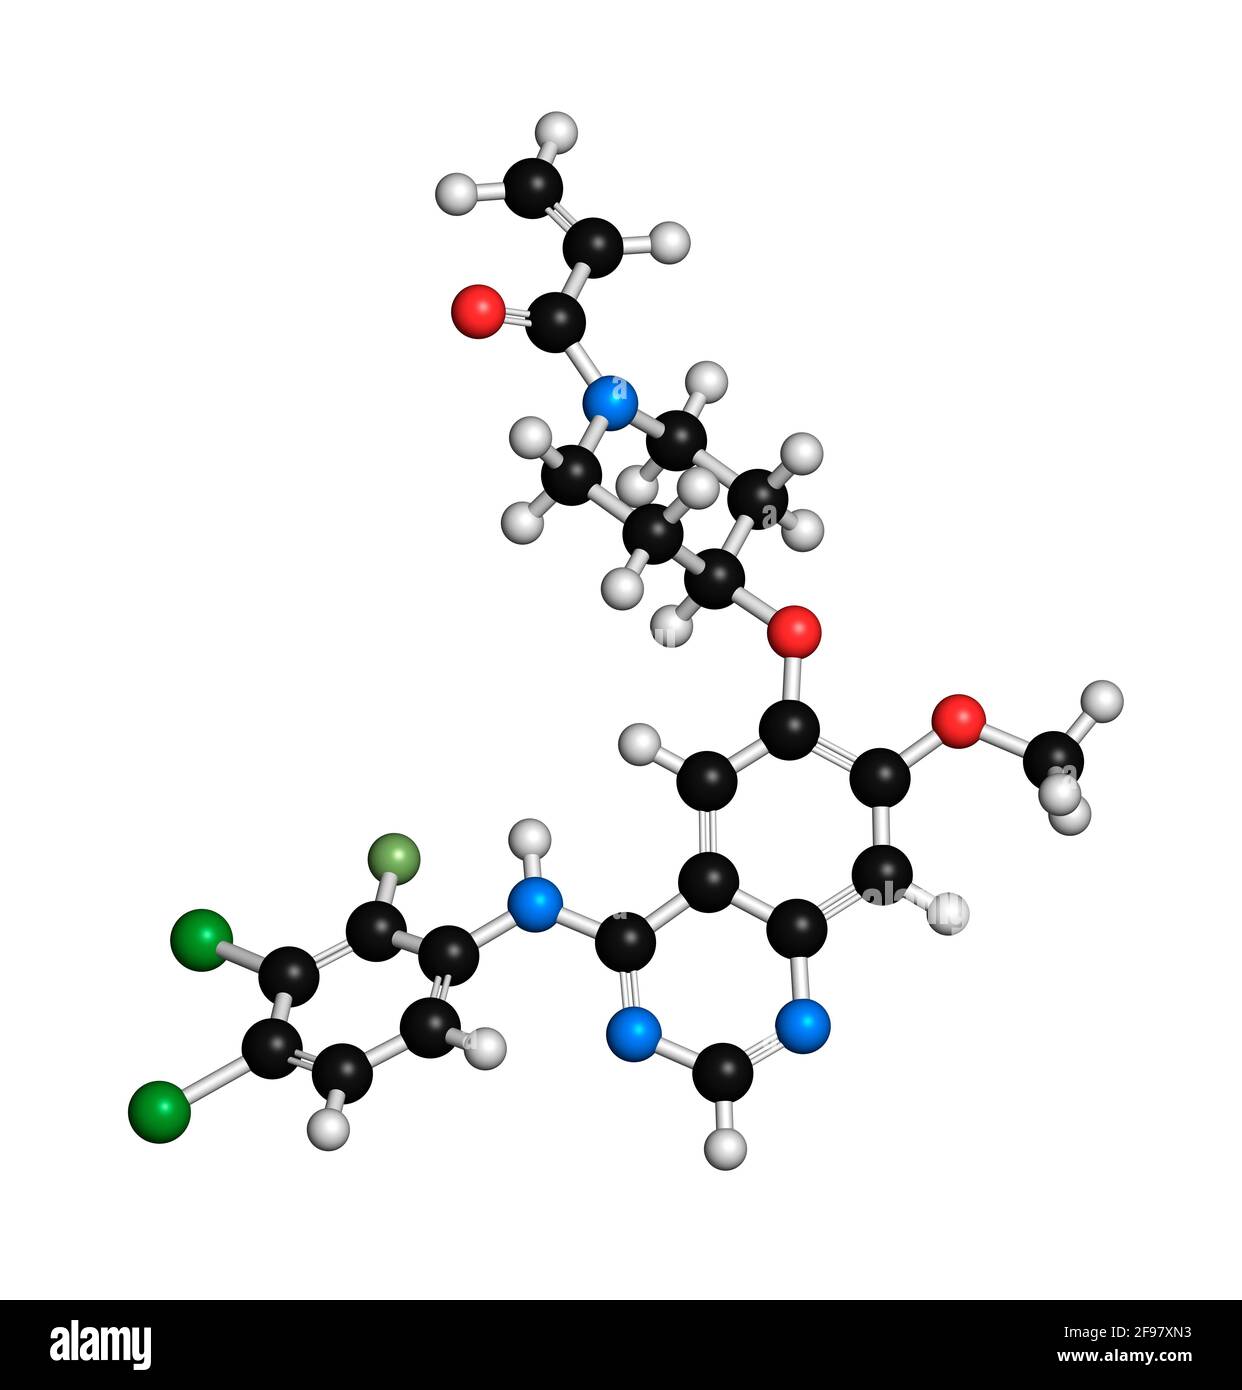 Poziotinib cancer drug molecule, illustration Stock Photo